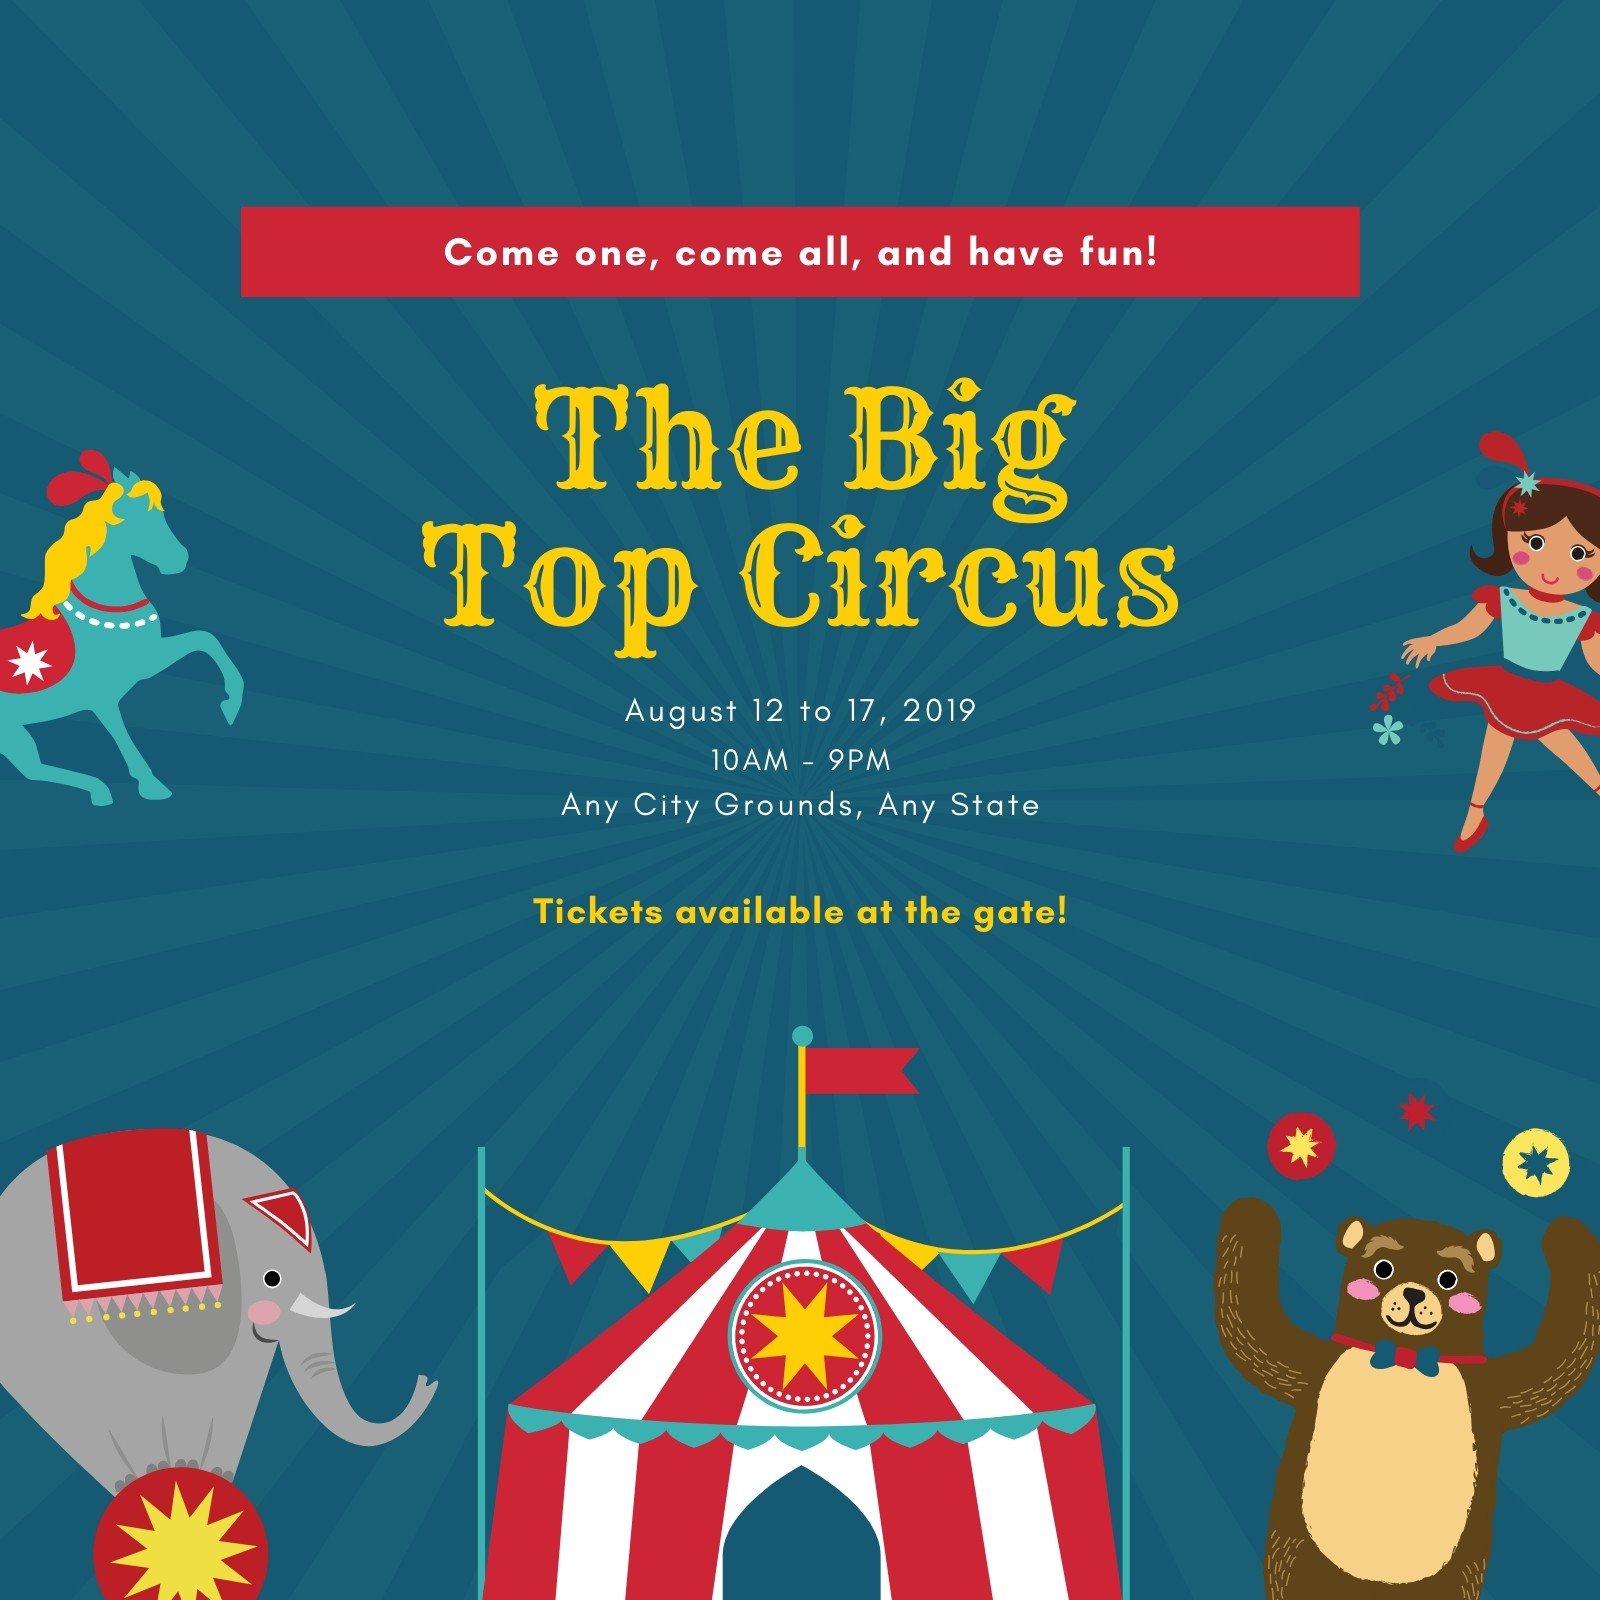 circus invitations templates free